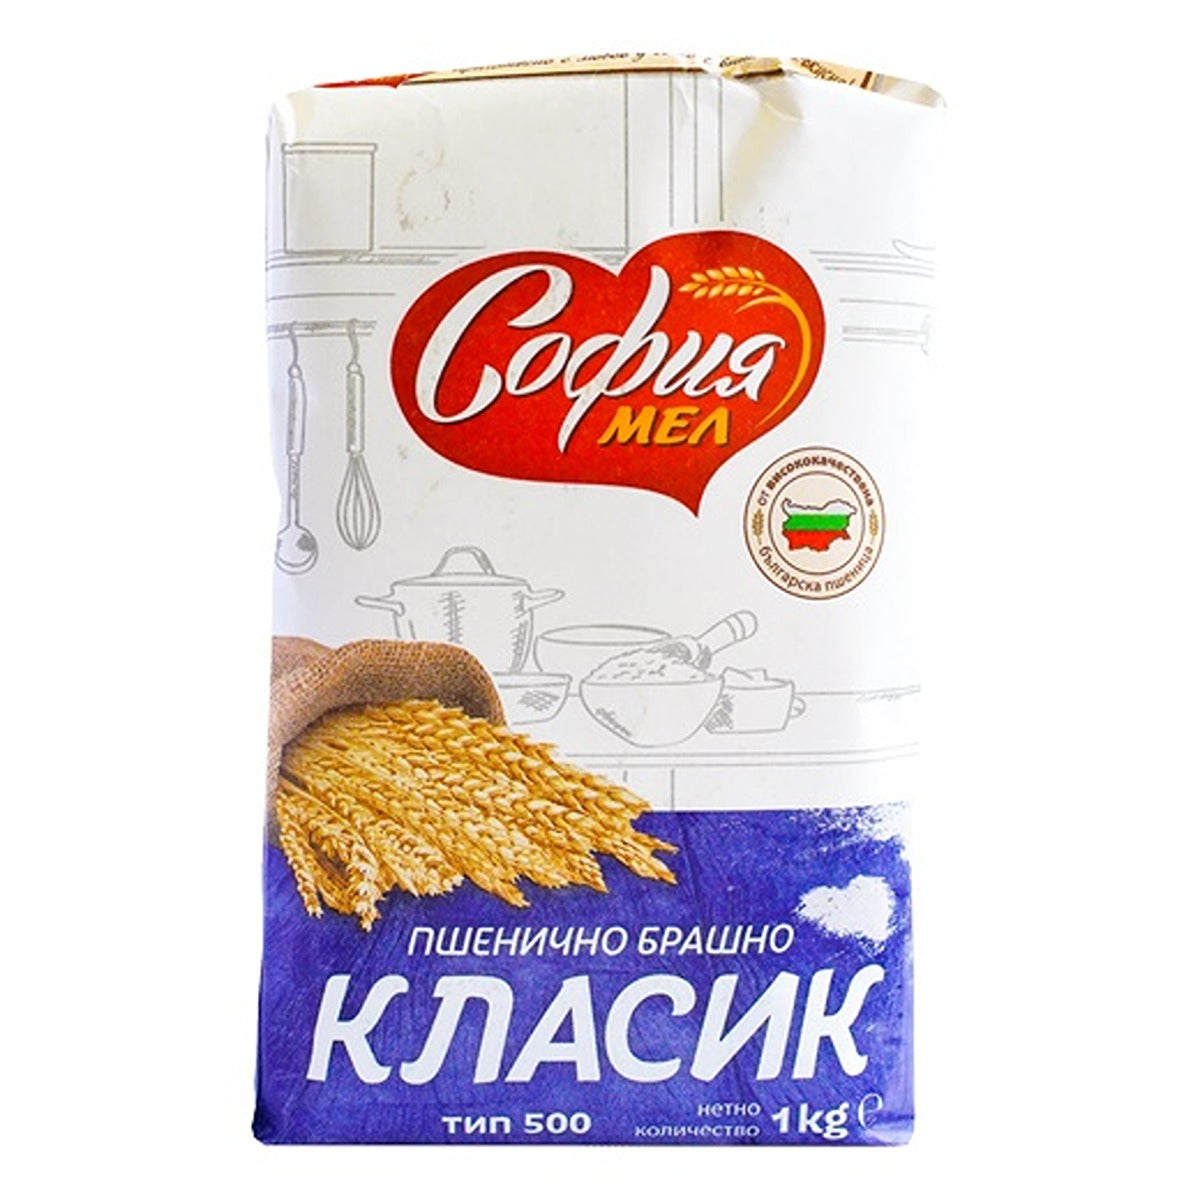 A bag of Sofia - Classic White Flour - 1kg on a white background.